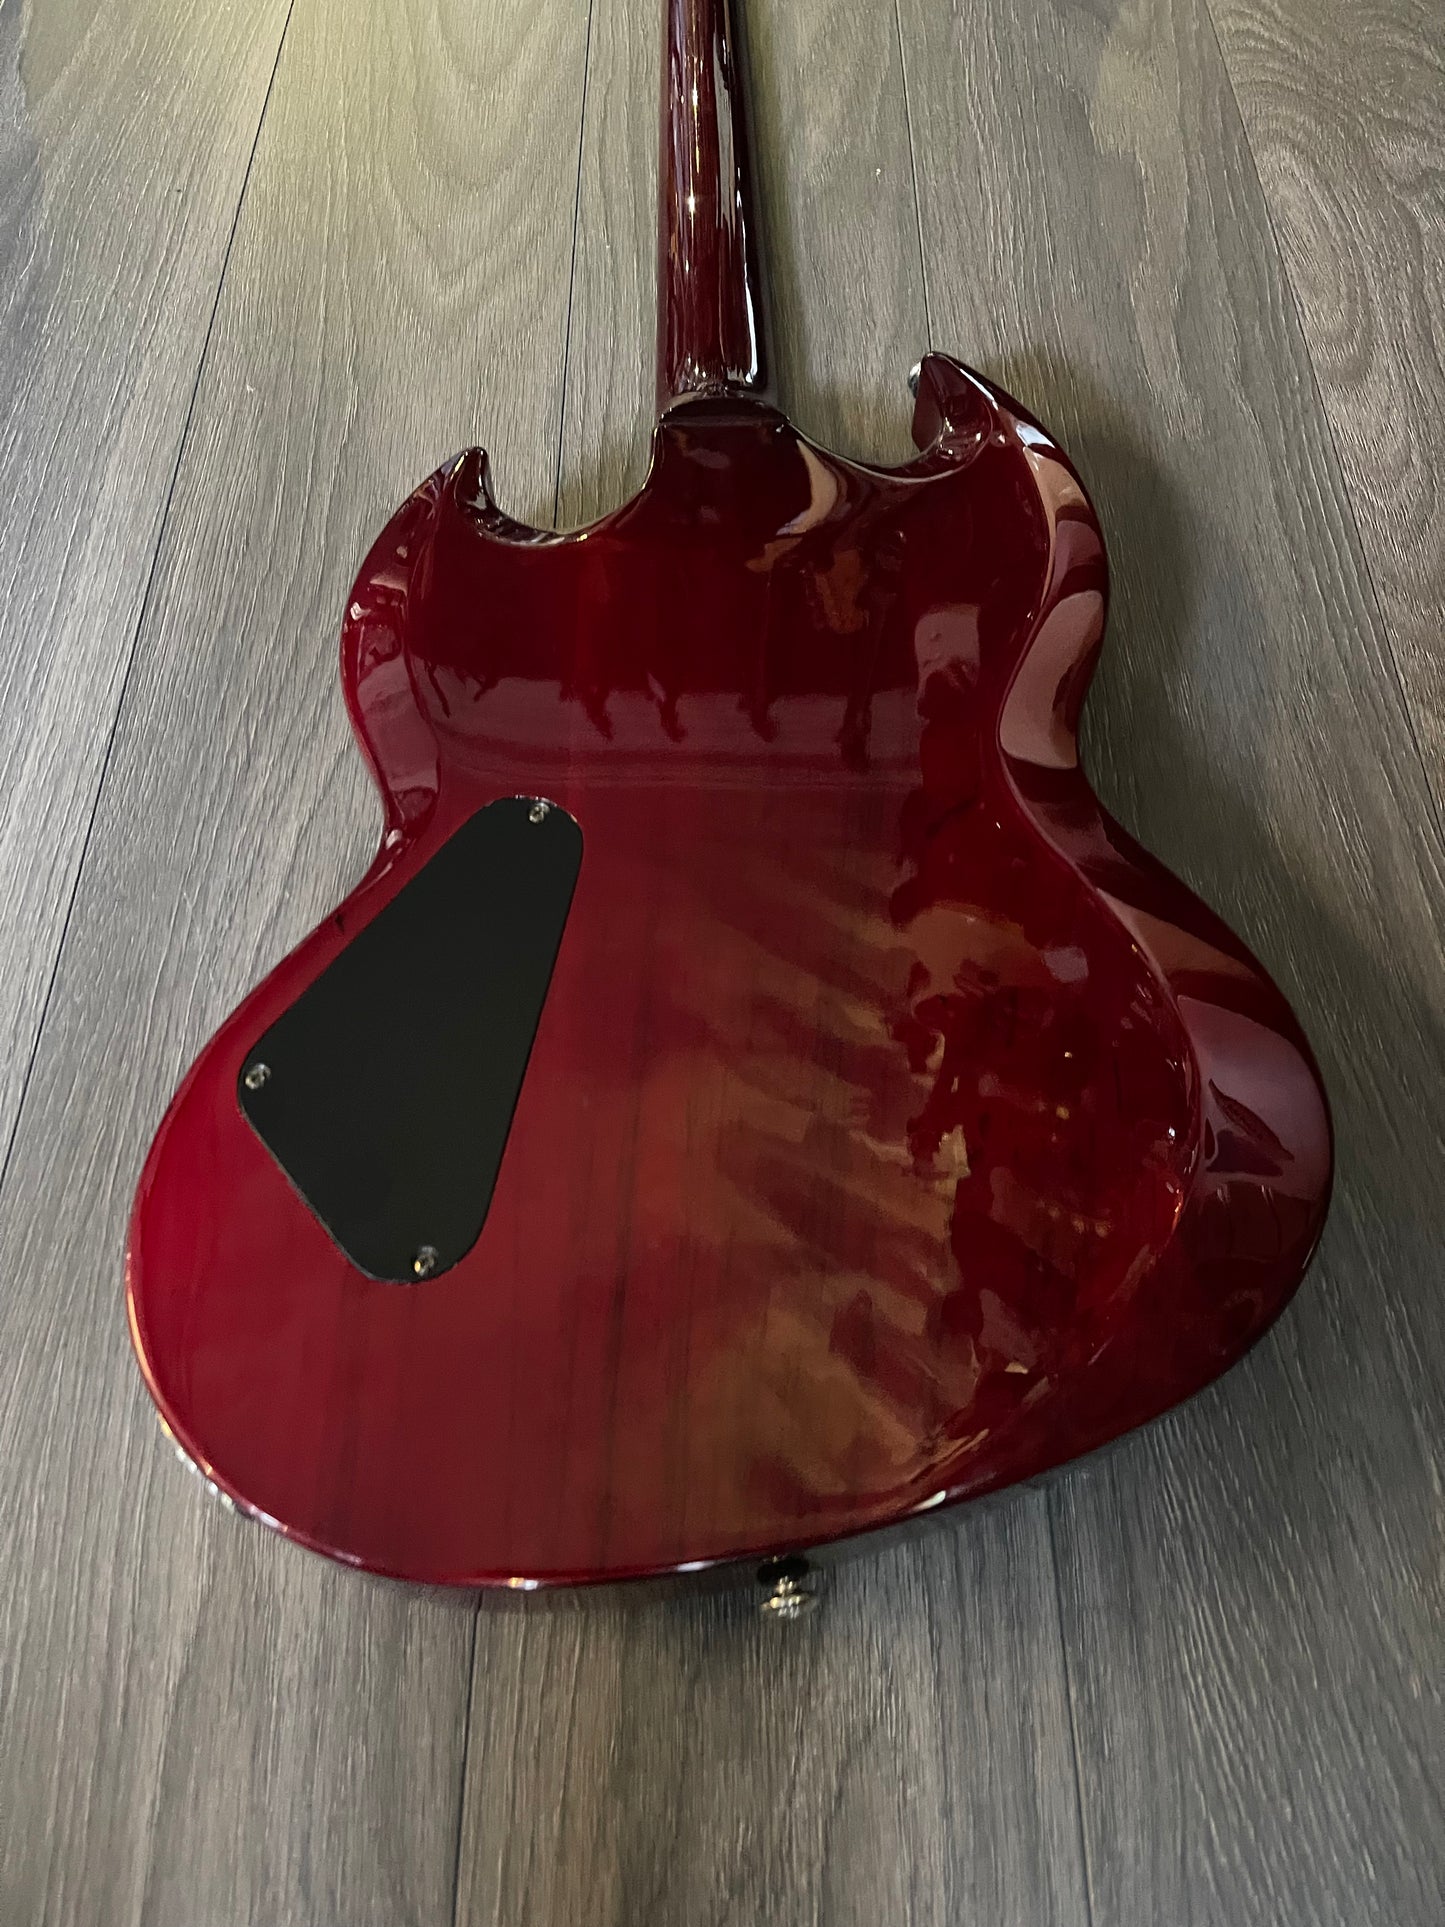 ESP LTD VIPER-256 electric guitar, See Thru Black Cherry